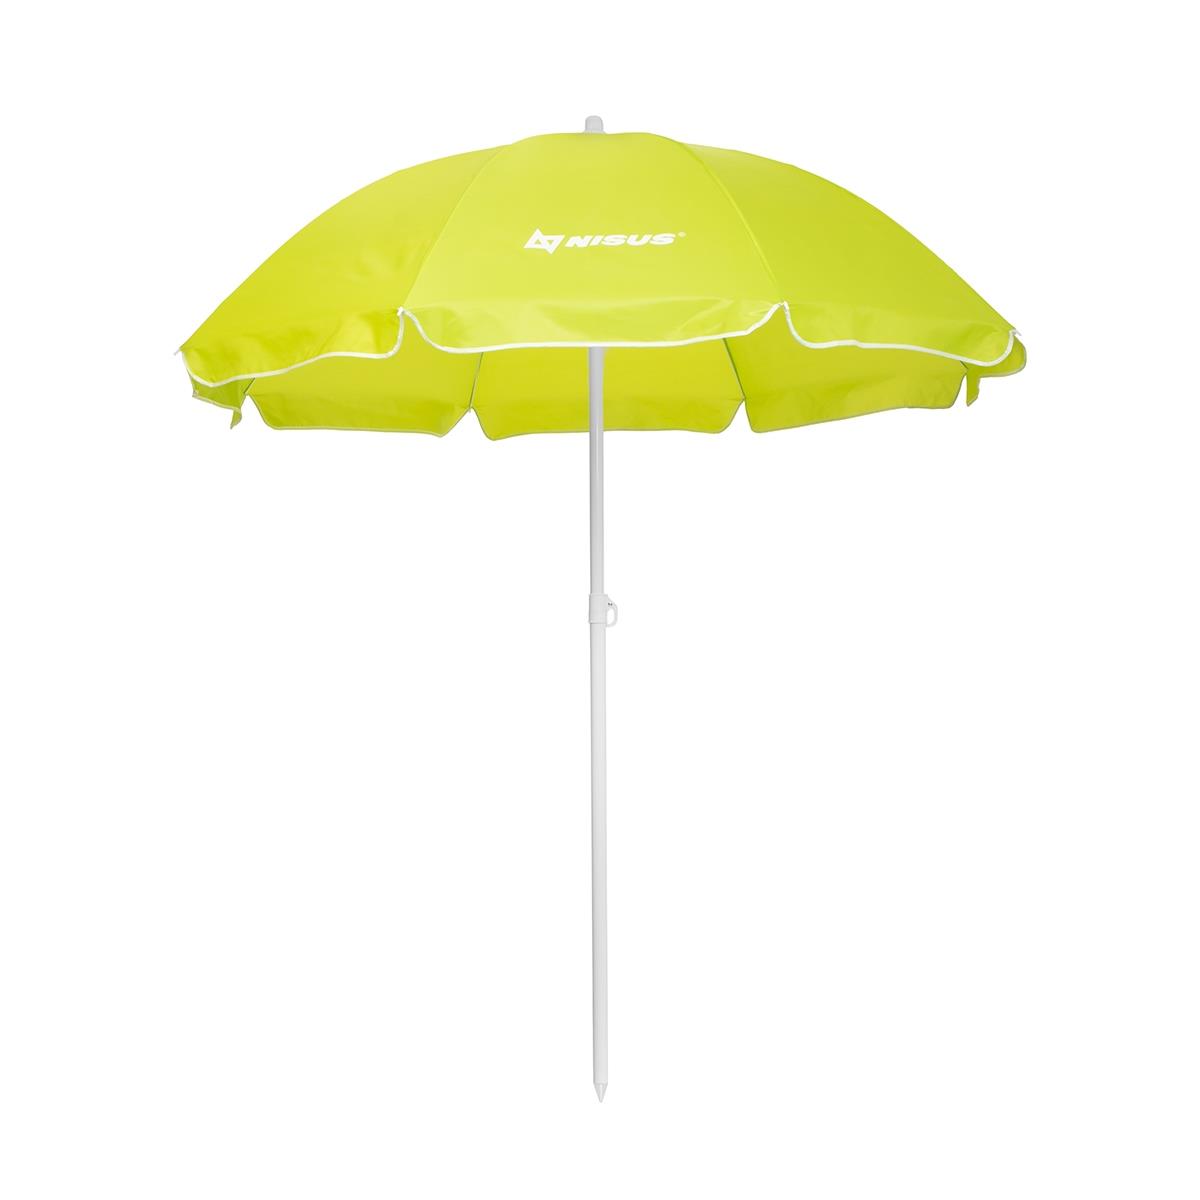 Зонт пляжный d 2,00м прямой салатовый (28/32/210D) NA-200/NA-200-LG NISUS зонт пляжный d 2 00м с наклоном салатовый 28 32 210d na 200n lg nisus